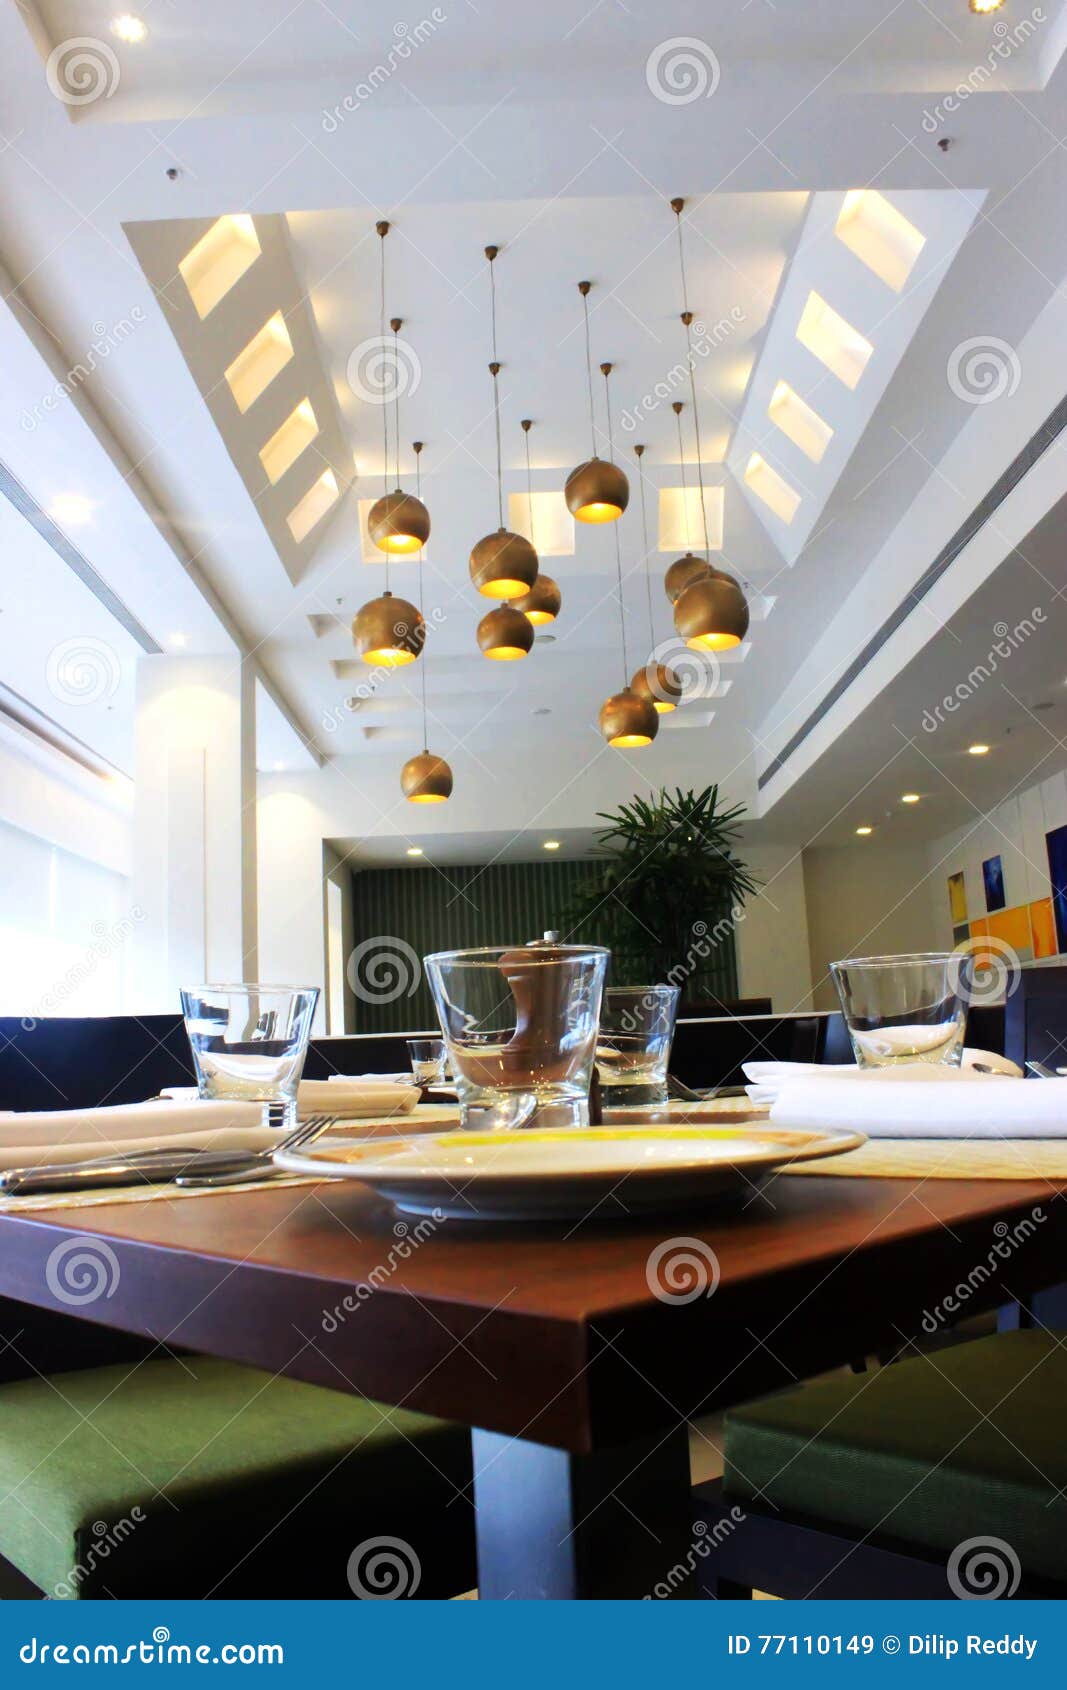 Classic Restaurant Stock Image Image Of Highlight Flooring